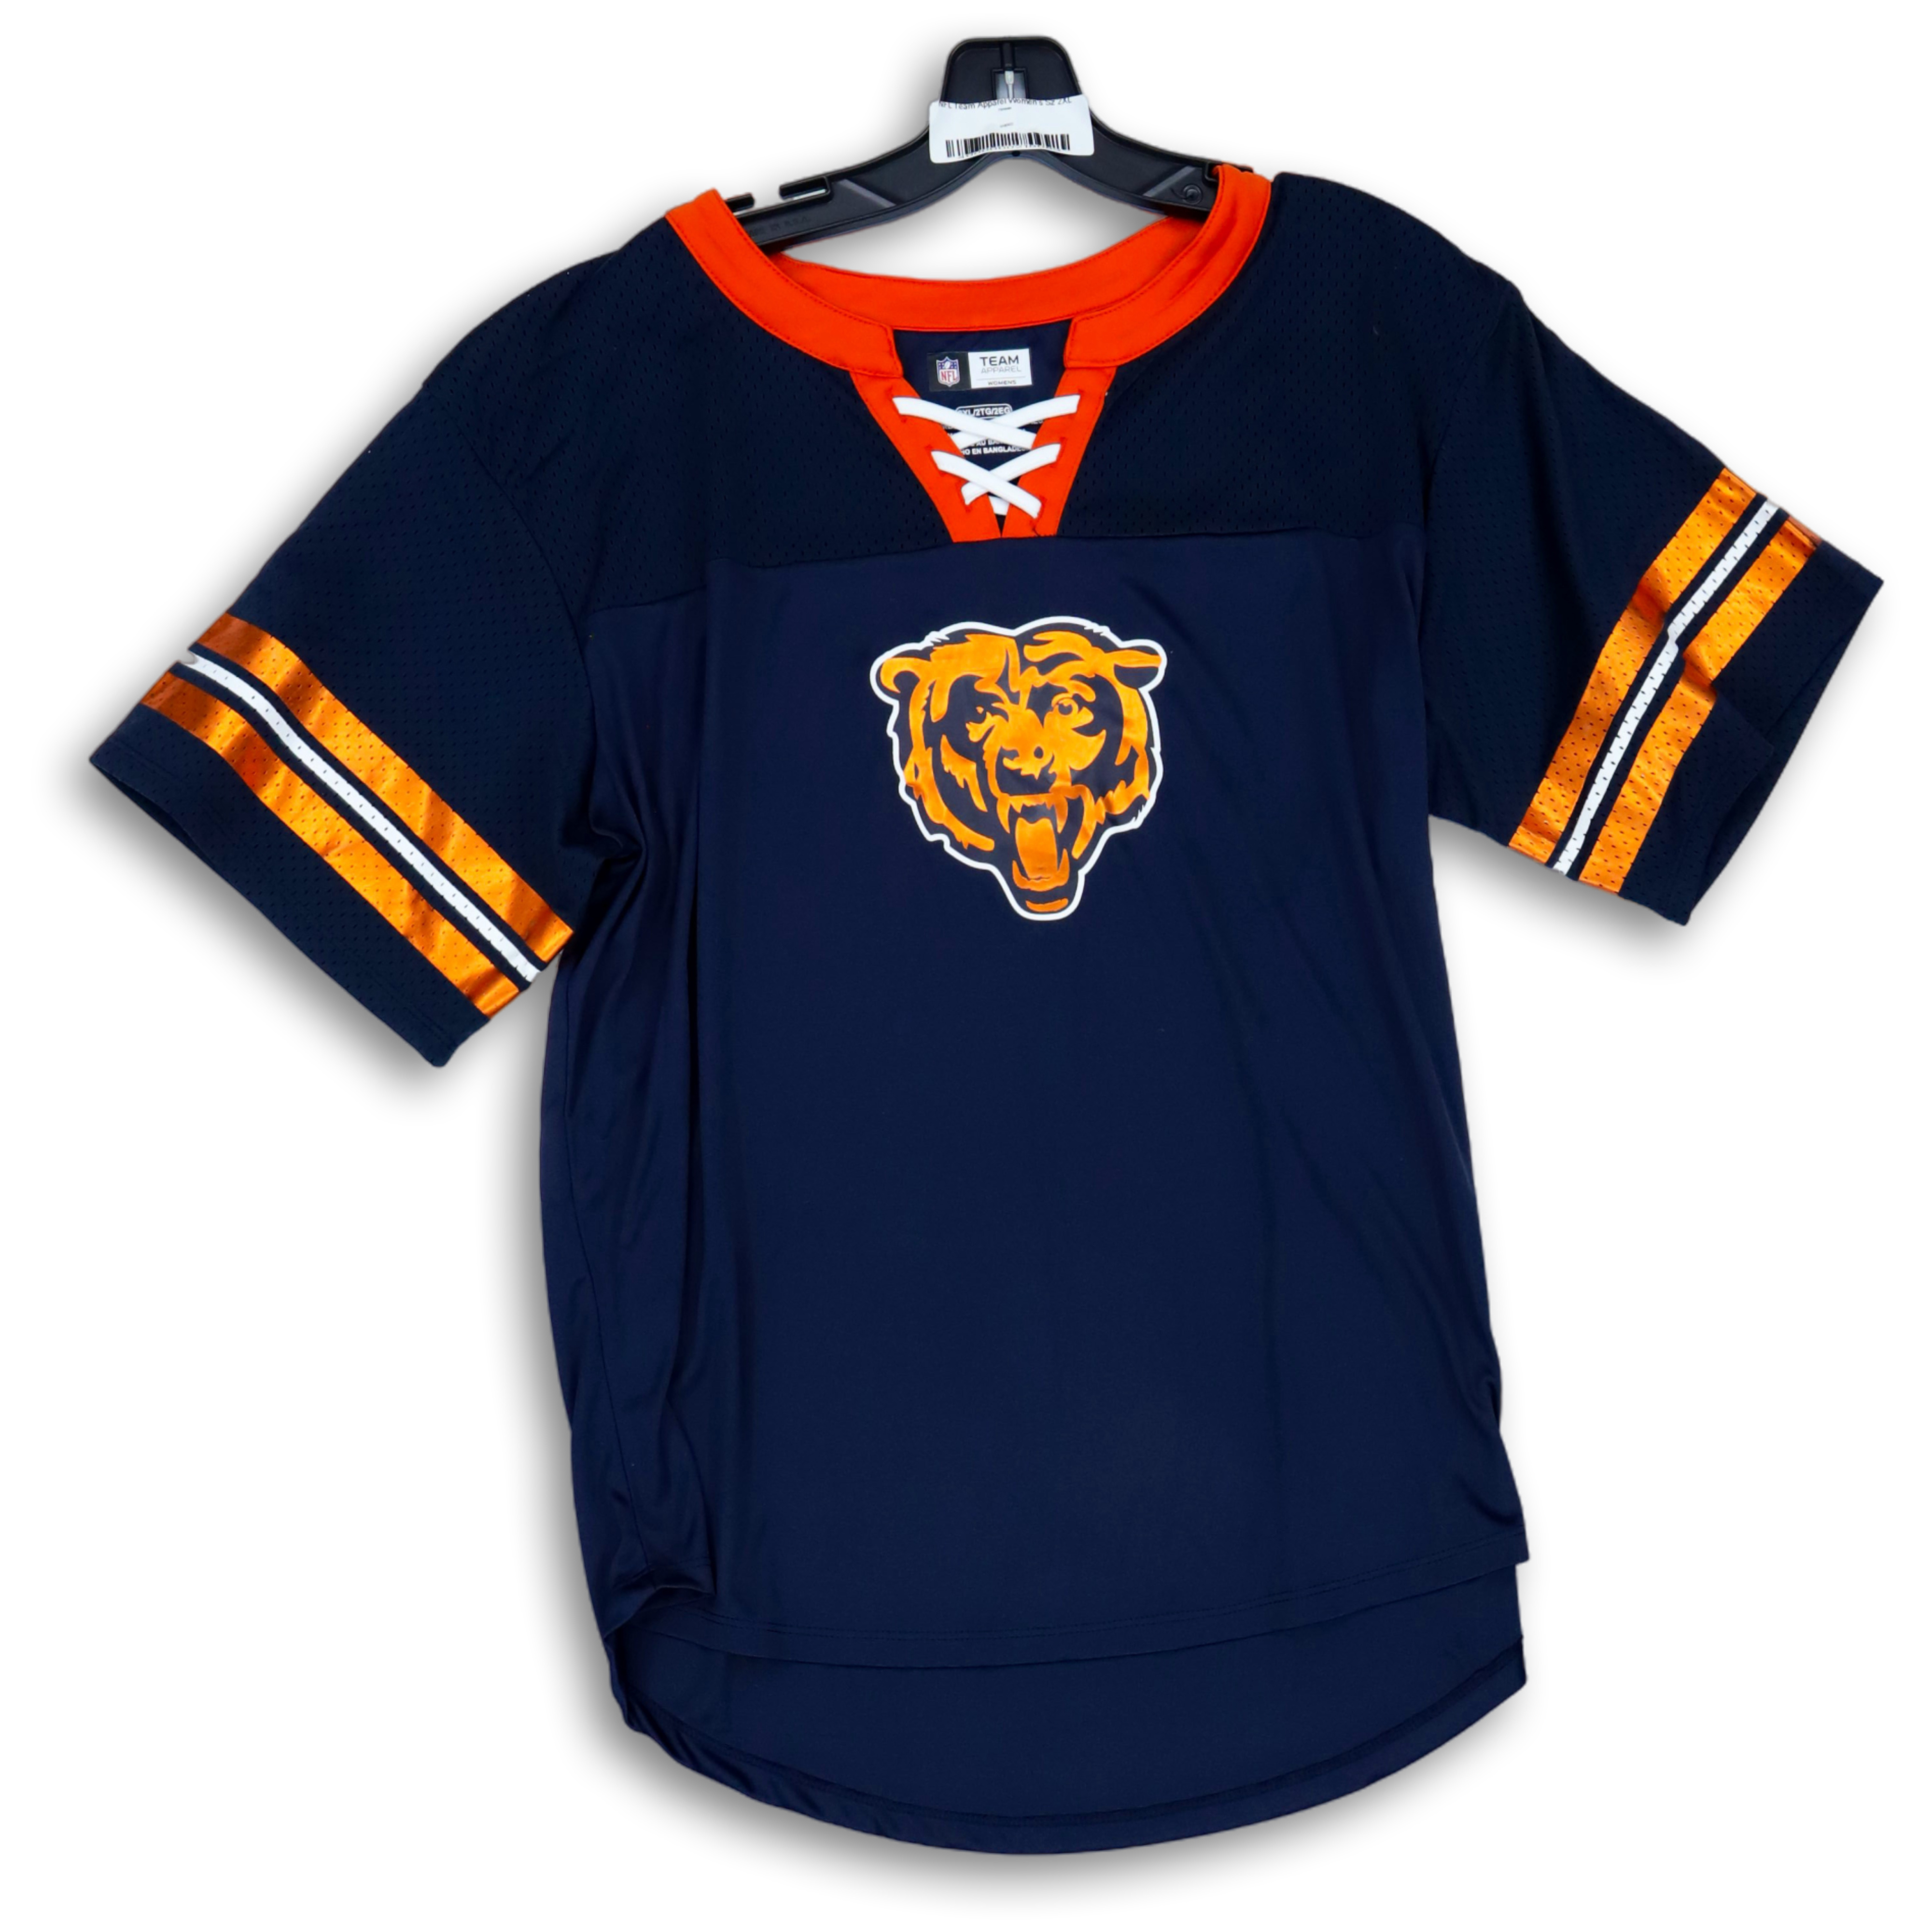 womens chicago bears jersey